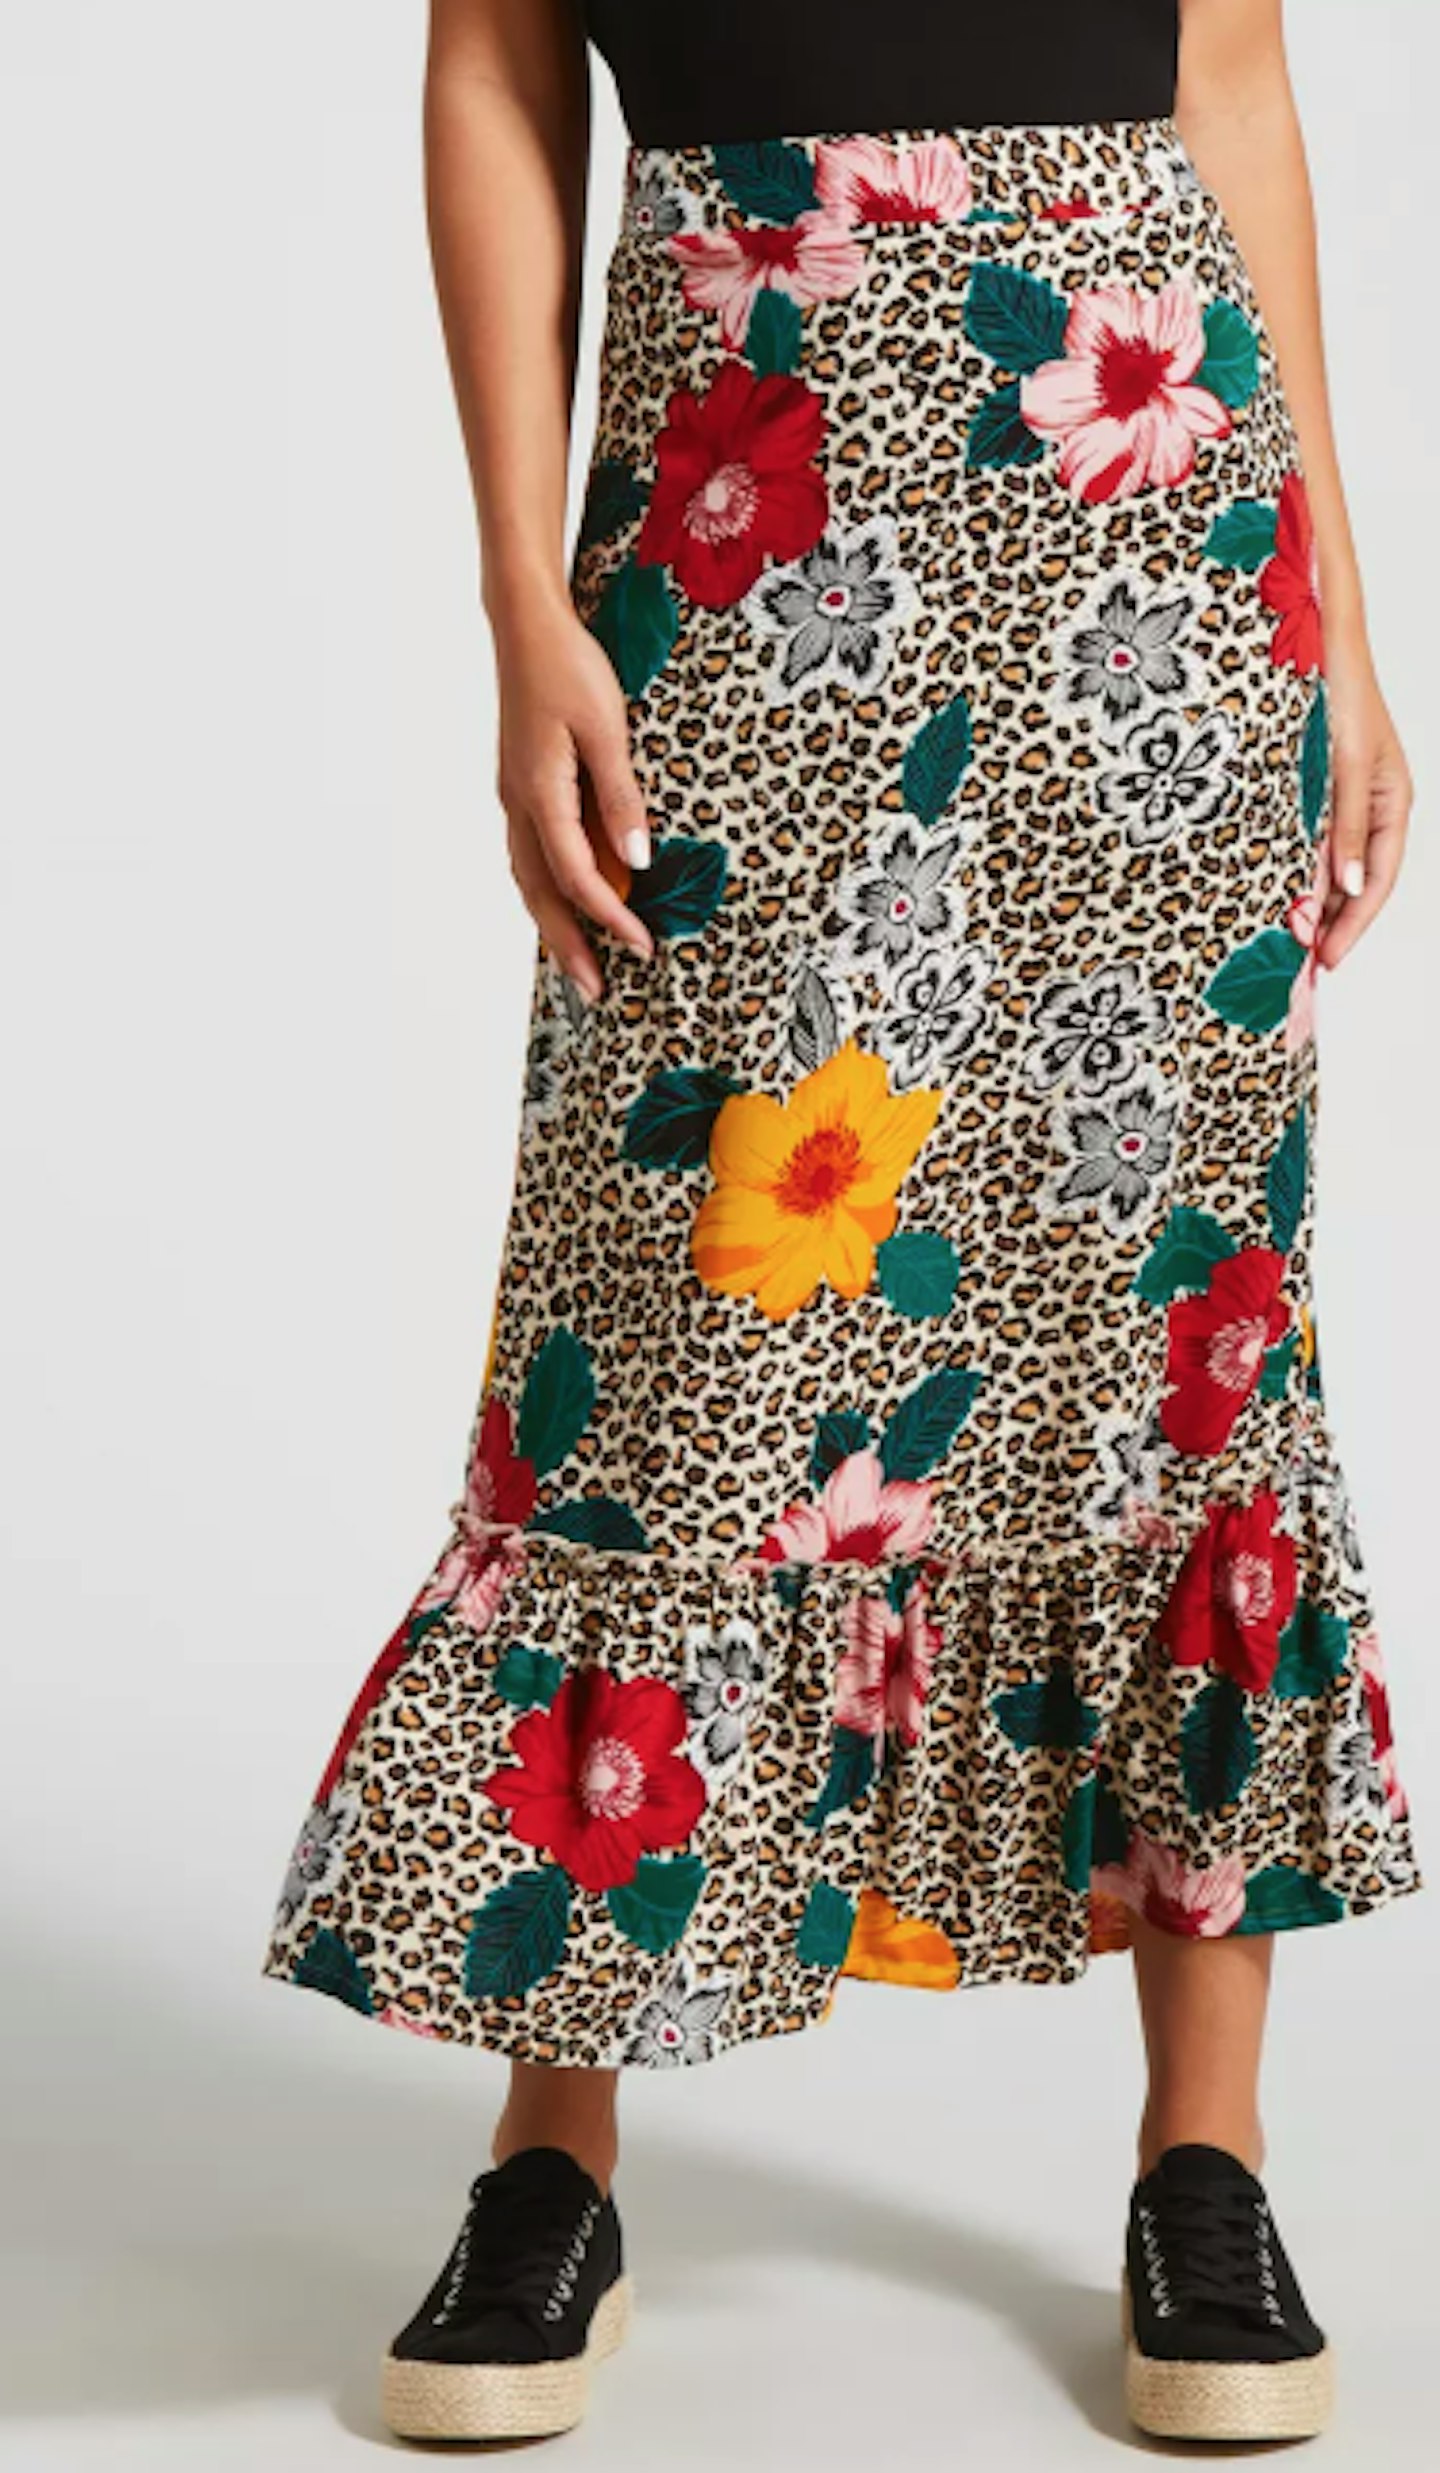 Floral Leopard Print Co-ord Midi Skirt, £14